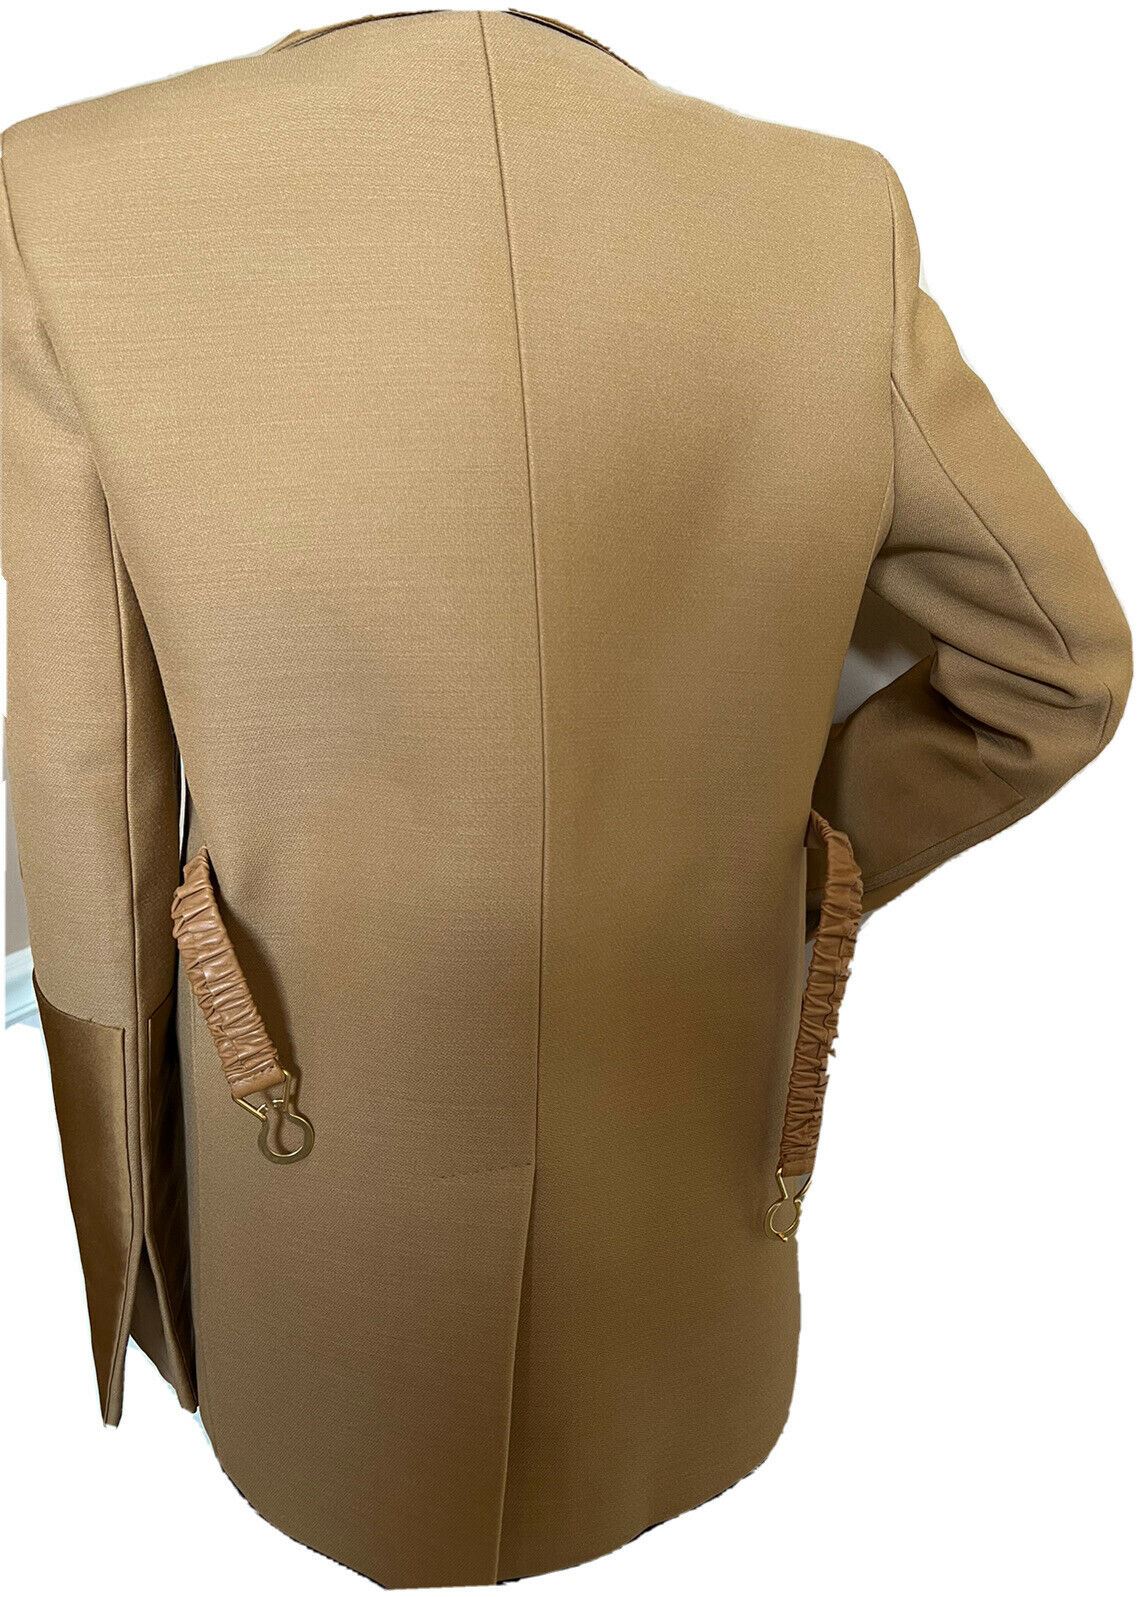 NWT $2880 Bottega Veneta Women's Camel/Caramel Single-breasted Jacket 38 US